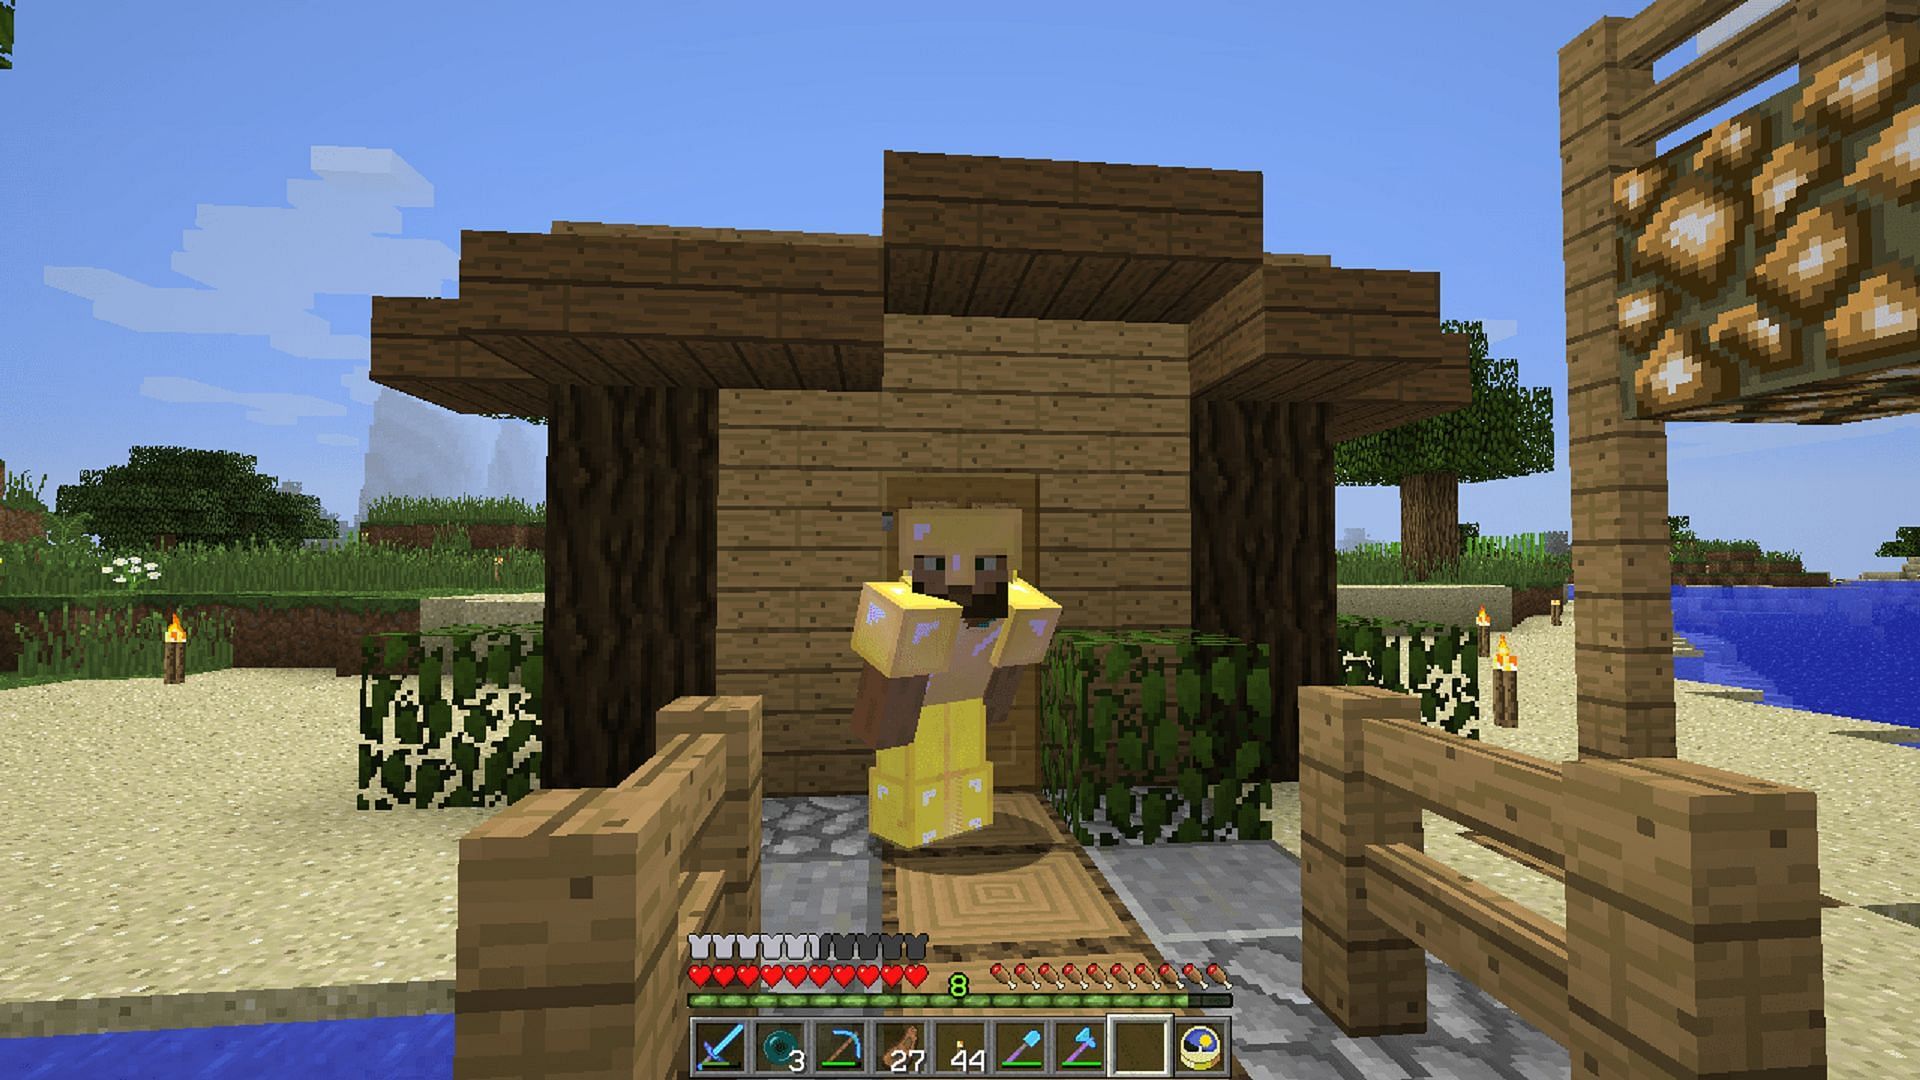 A player dons enchanted golden armor in Minecraft (Image via u/Koala_eiO/Reddit)